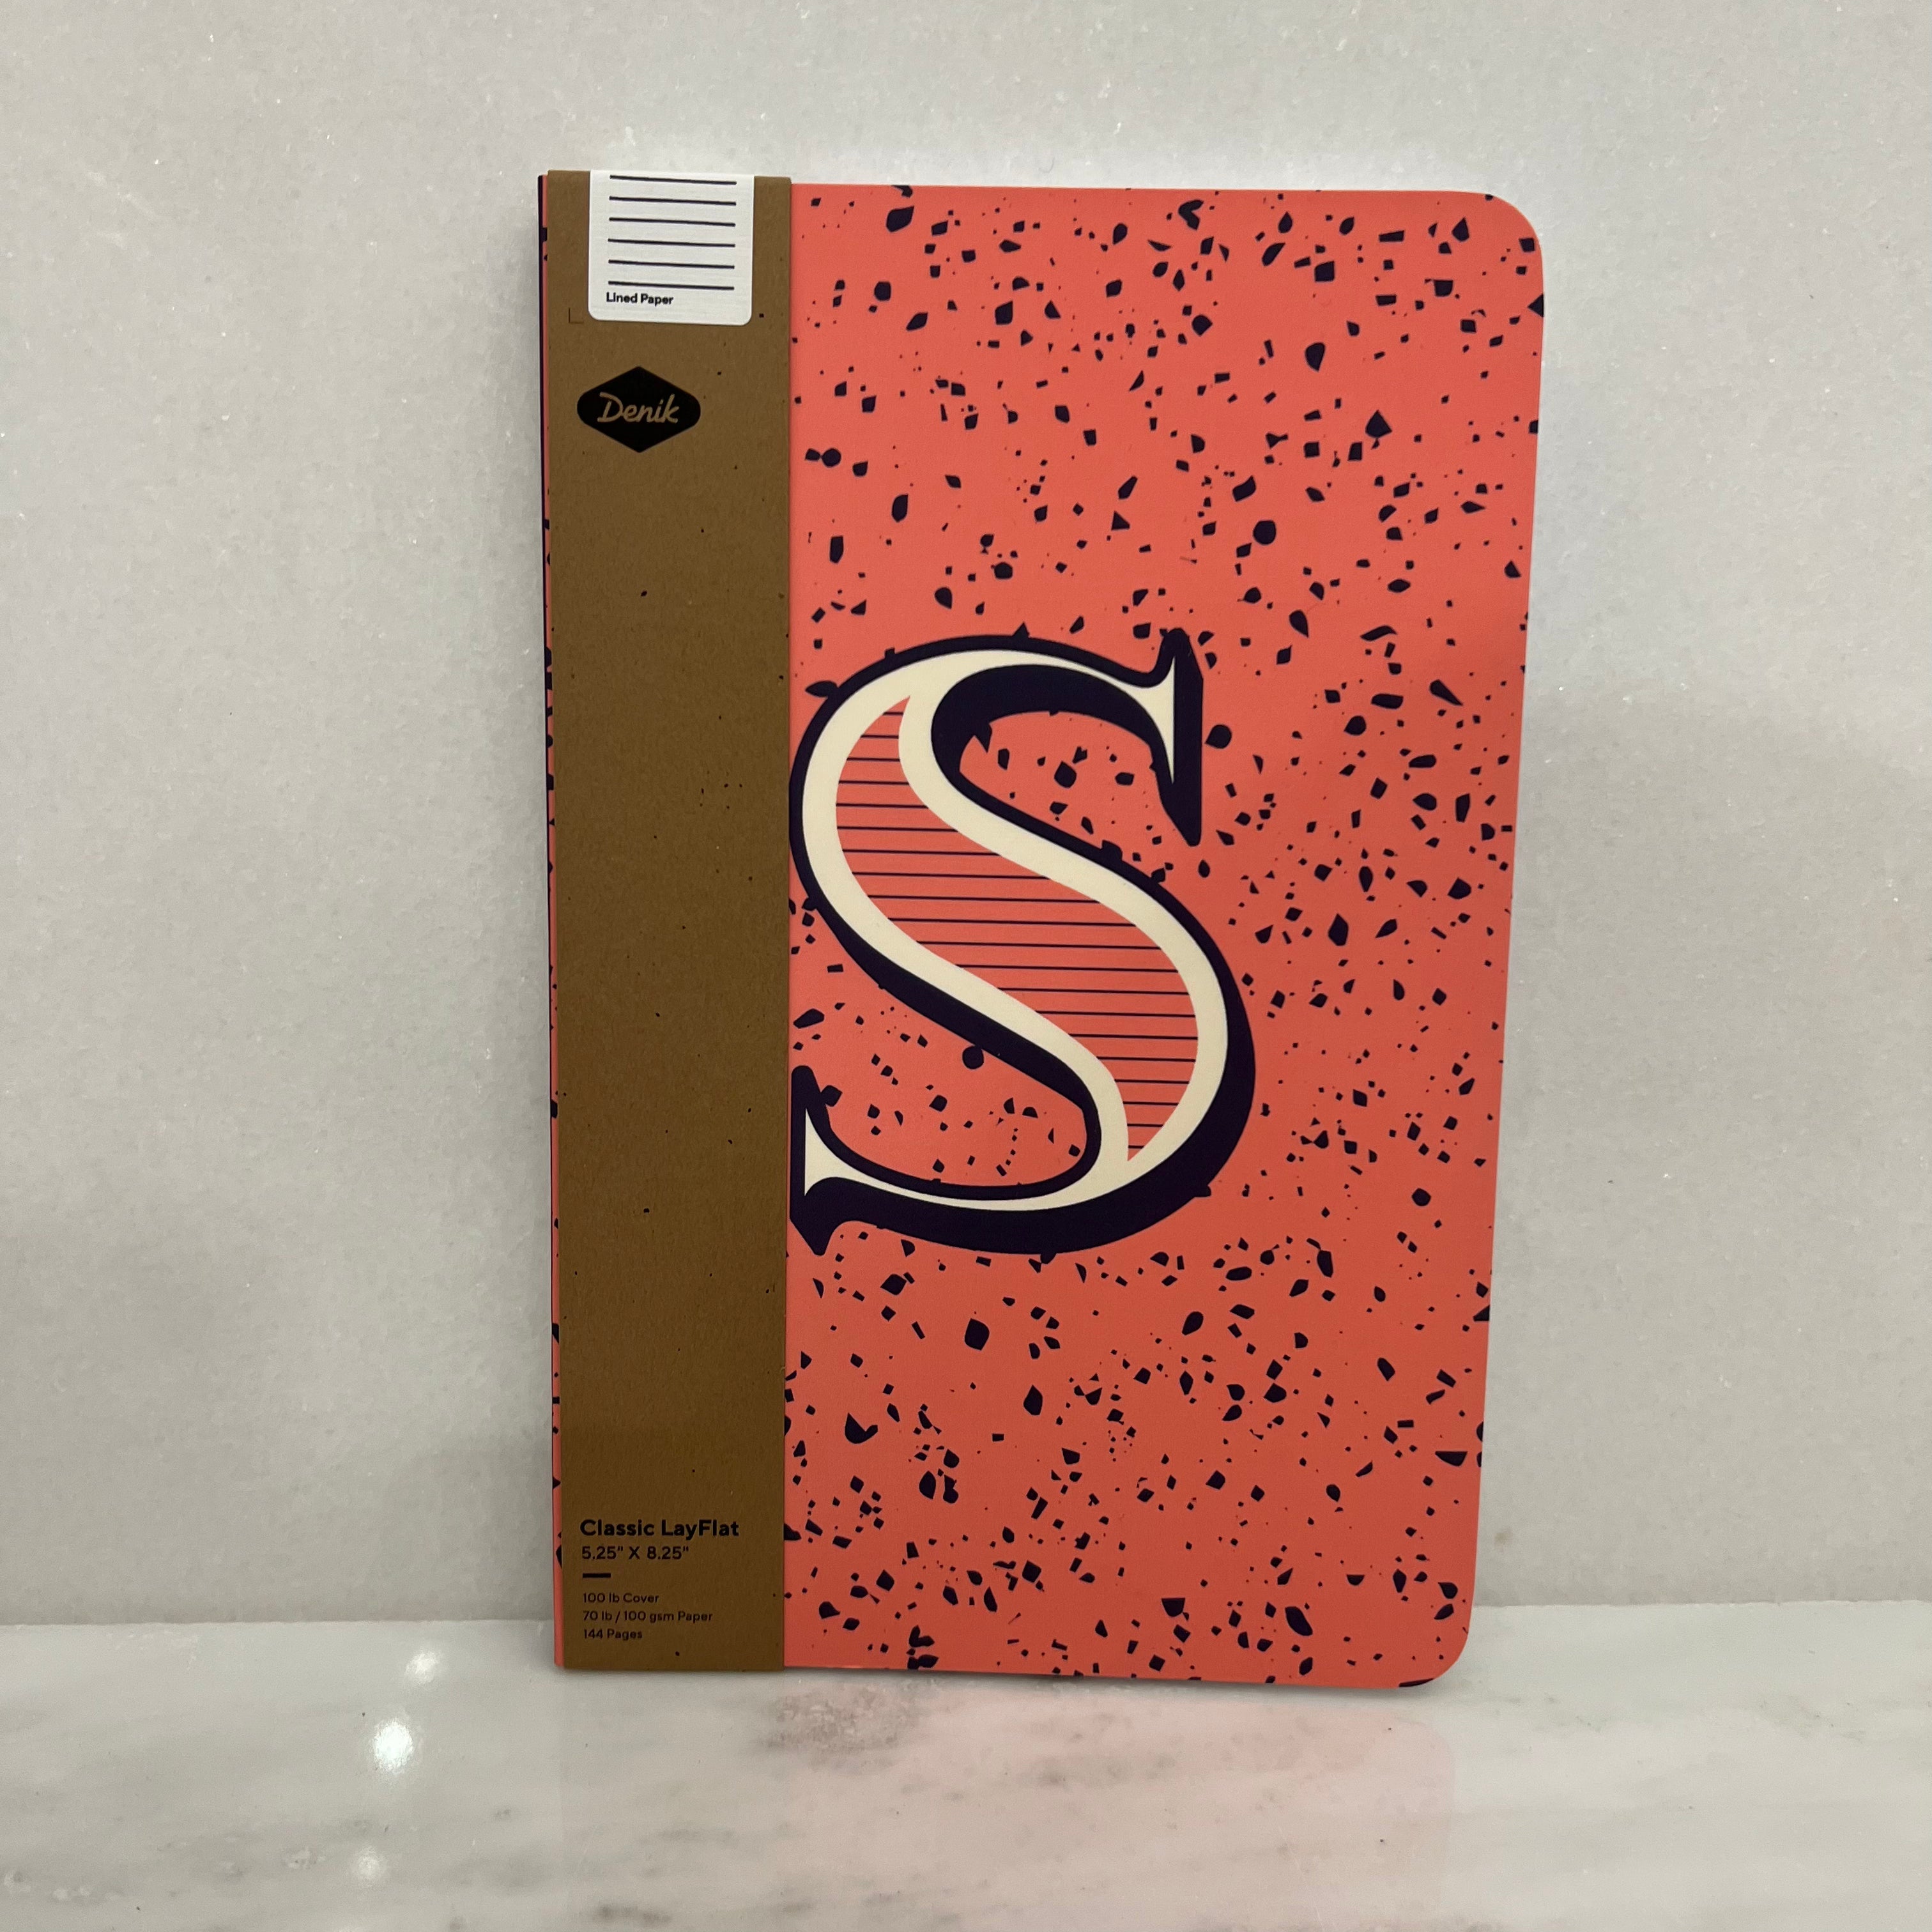 Denik "S" classic layflat notebook